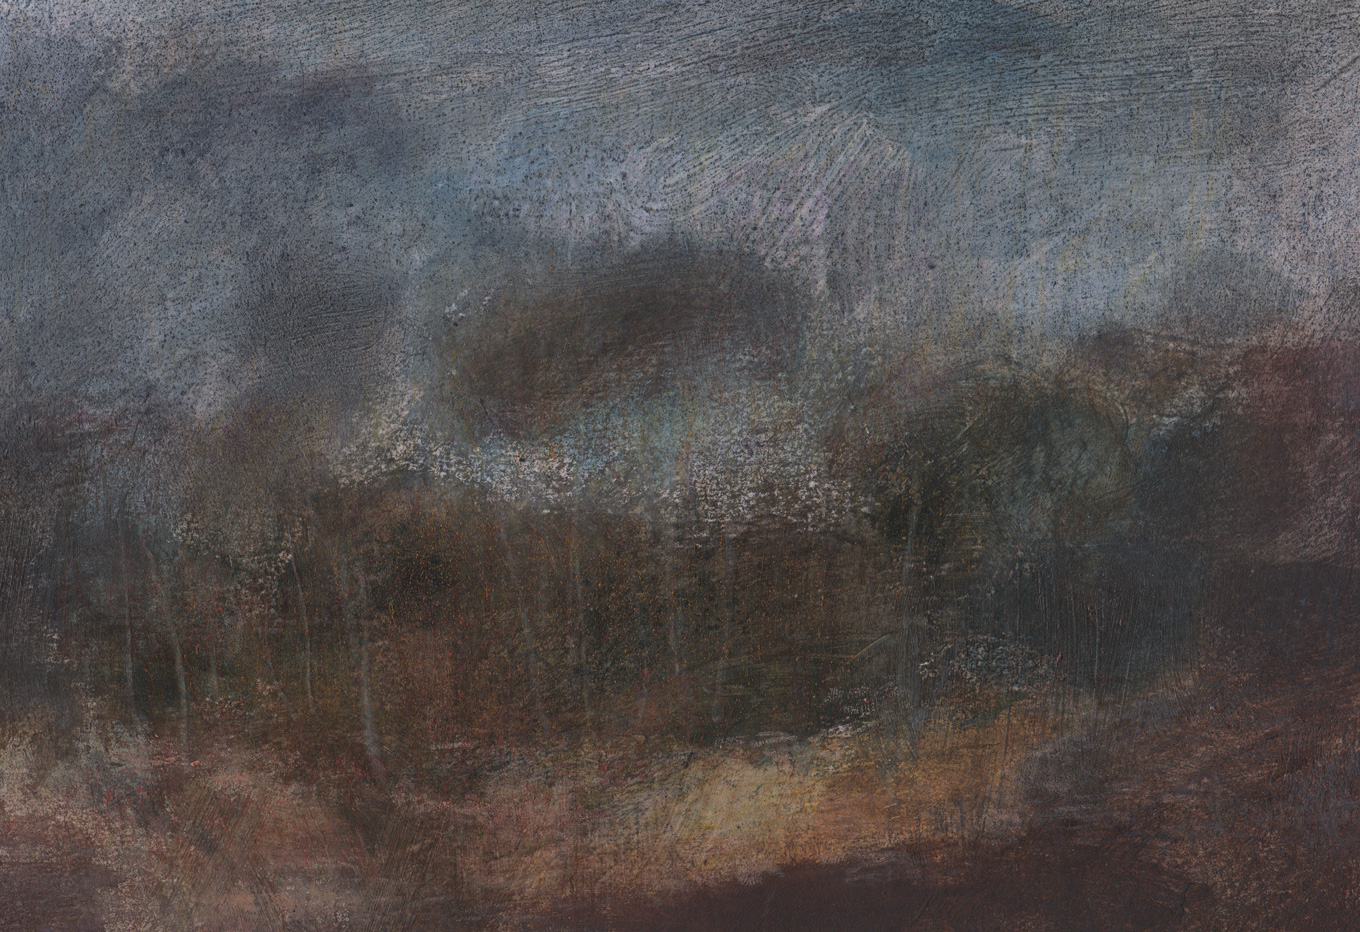 L1201 - Nicholas Herbert, British Artist, mixed media landscape painting of Chobham Common, mixed media on paper,Winter2019-2020